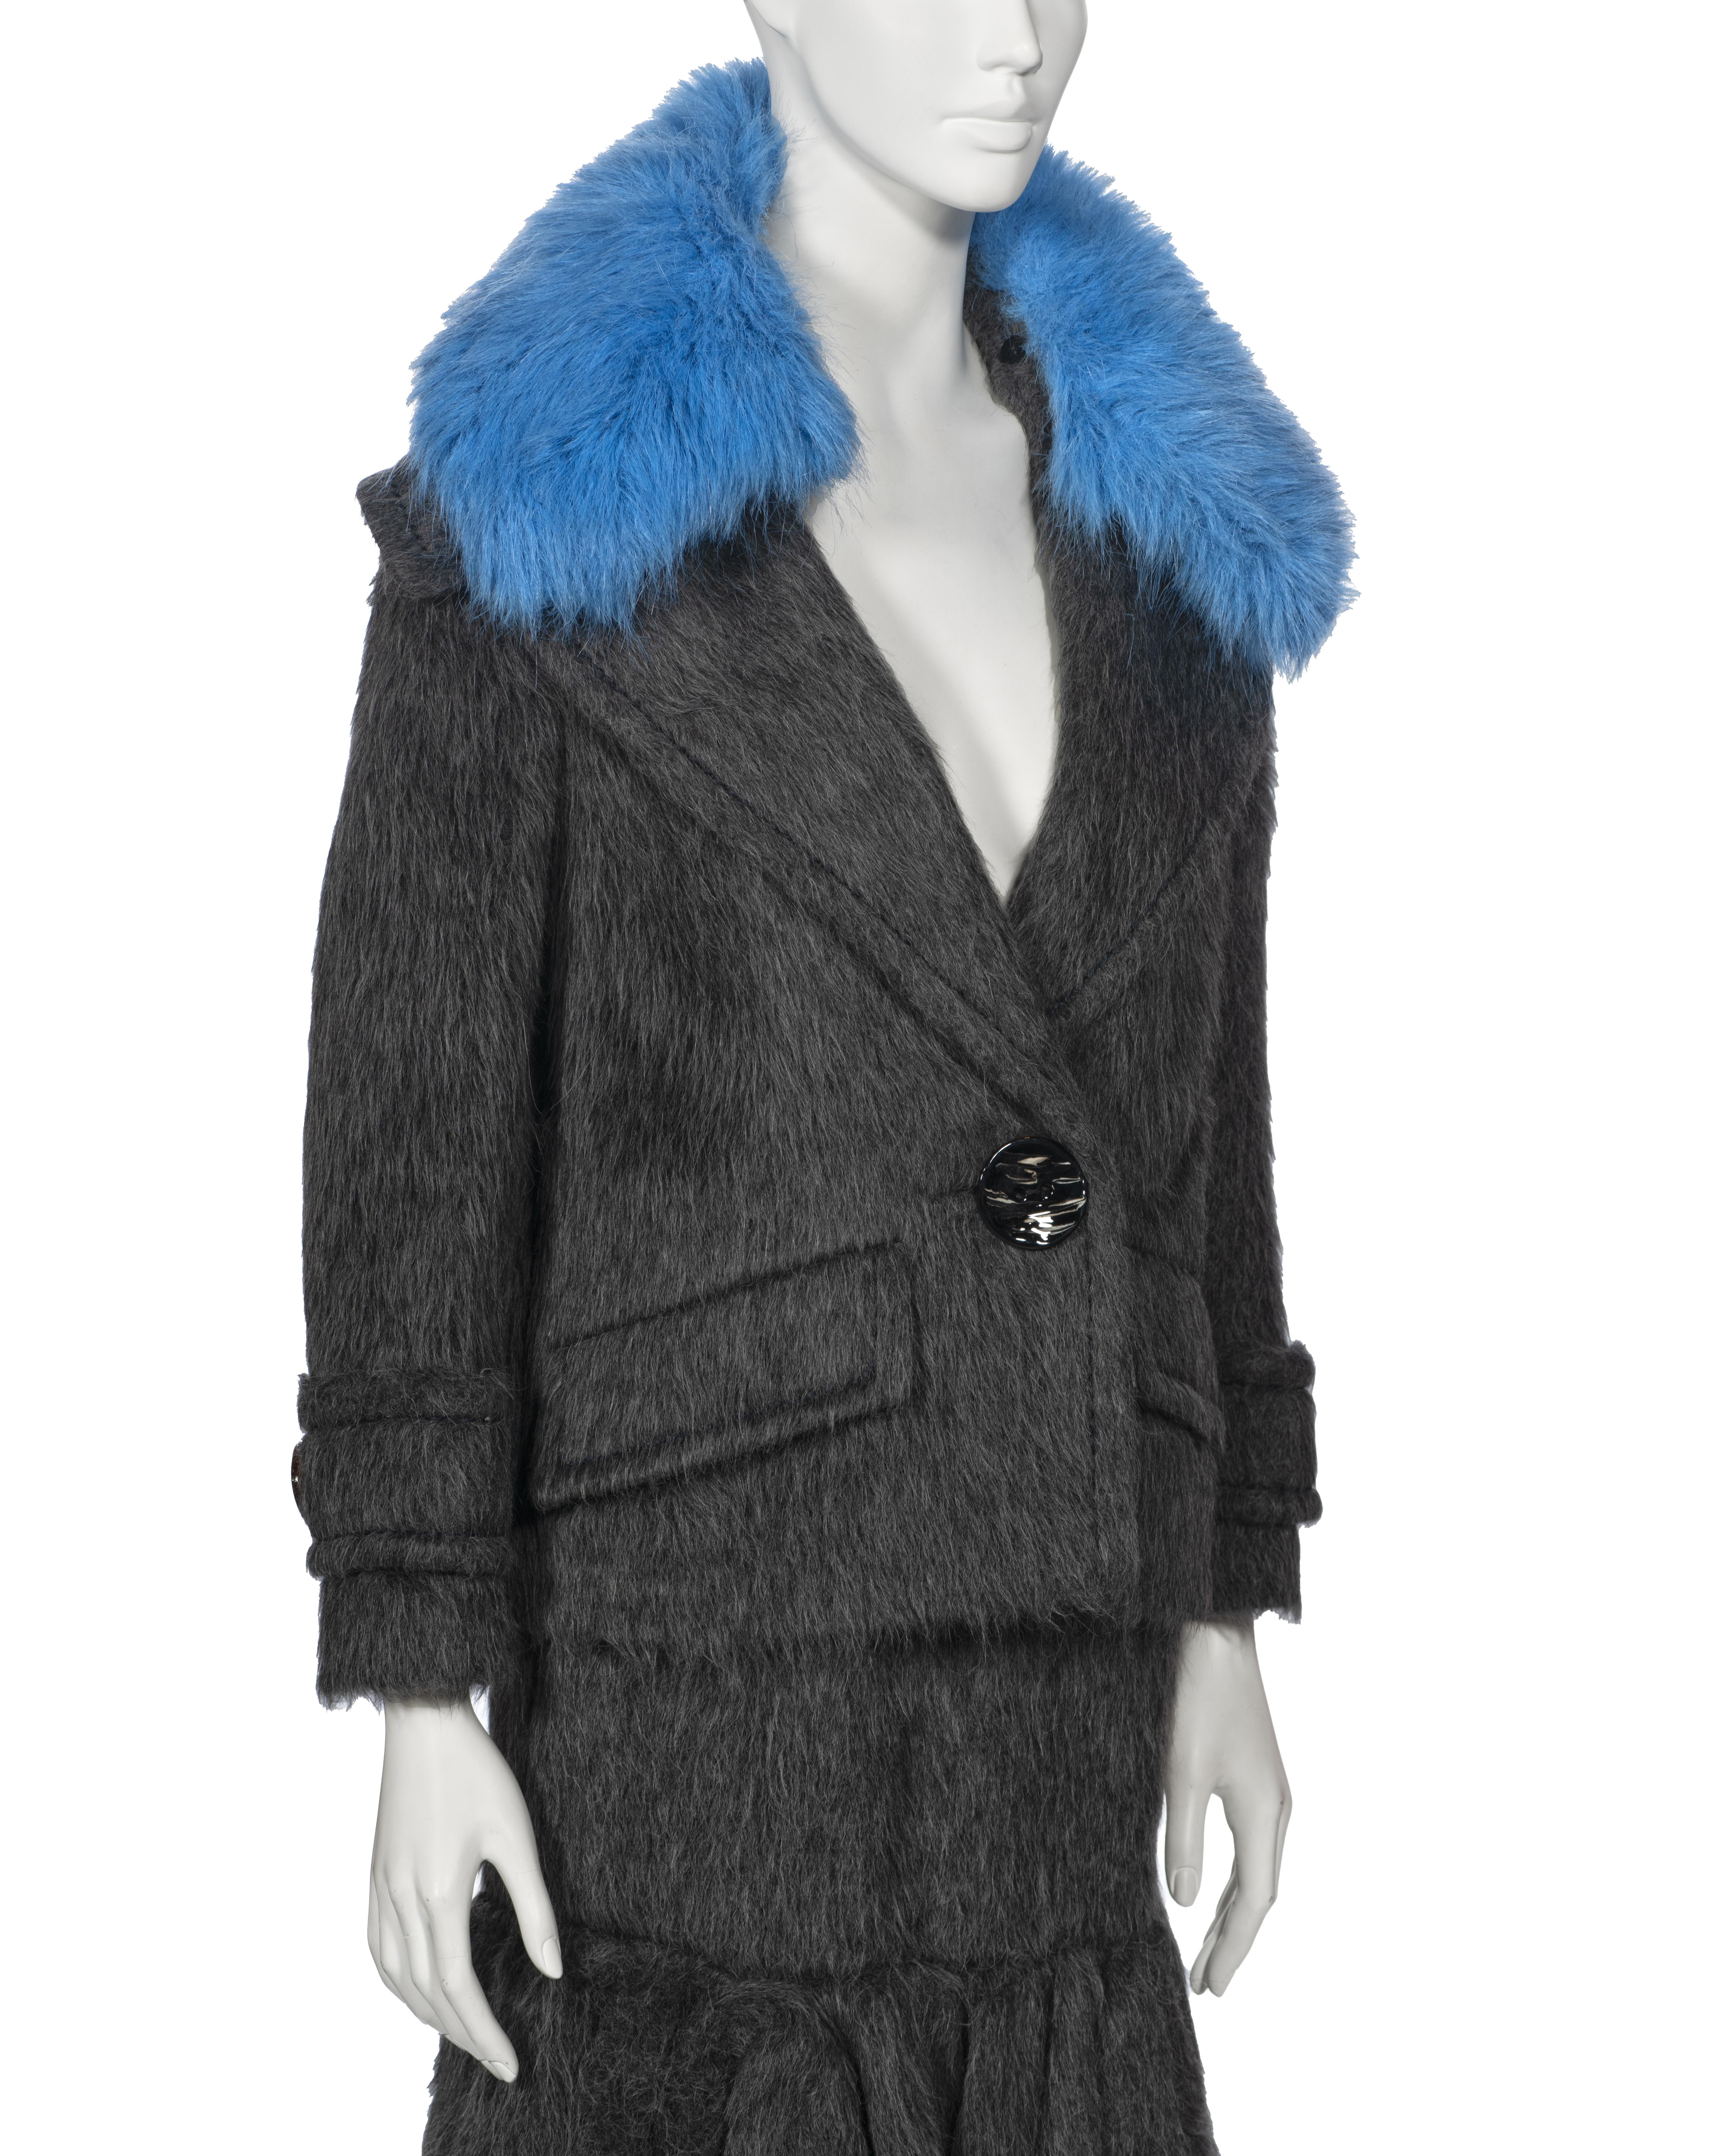 Prada by Miuccia Prada Grey Brushed Alpaca Silk Jacket and Skirt Suit, fw 2017 For Sale 2